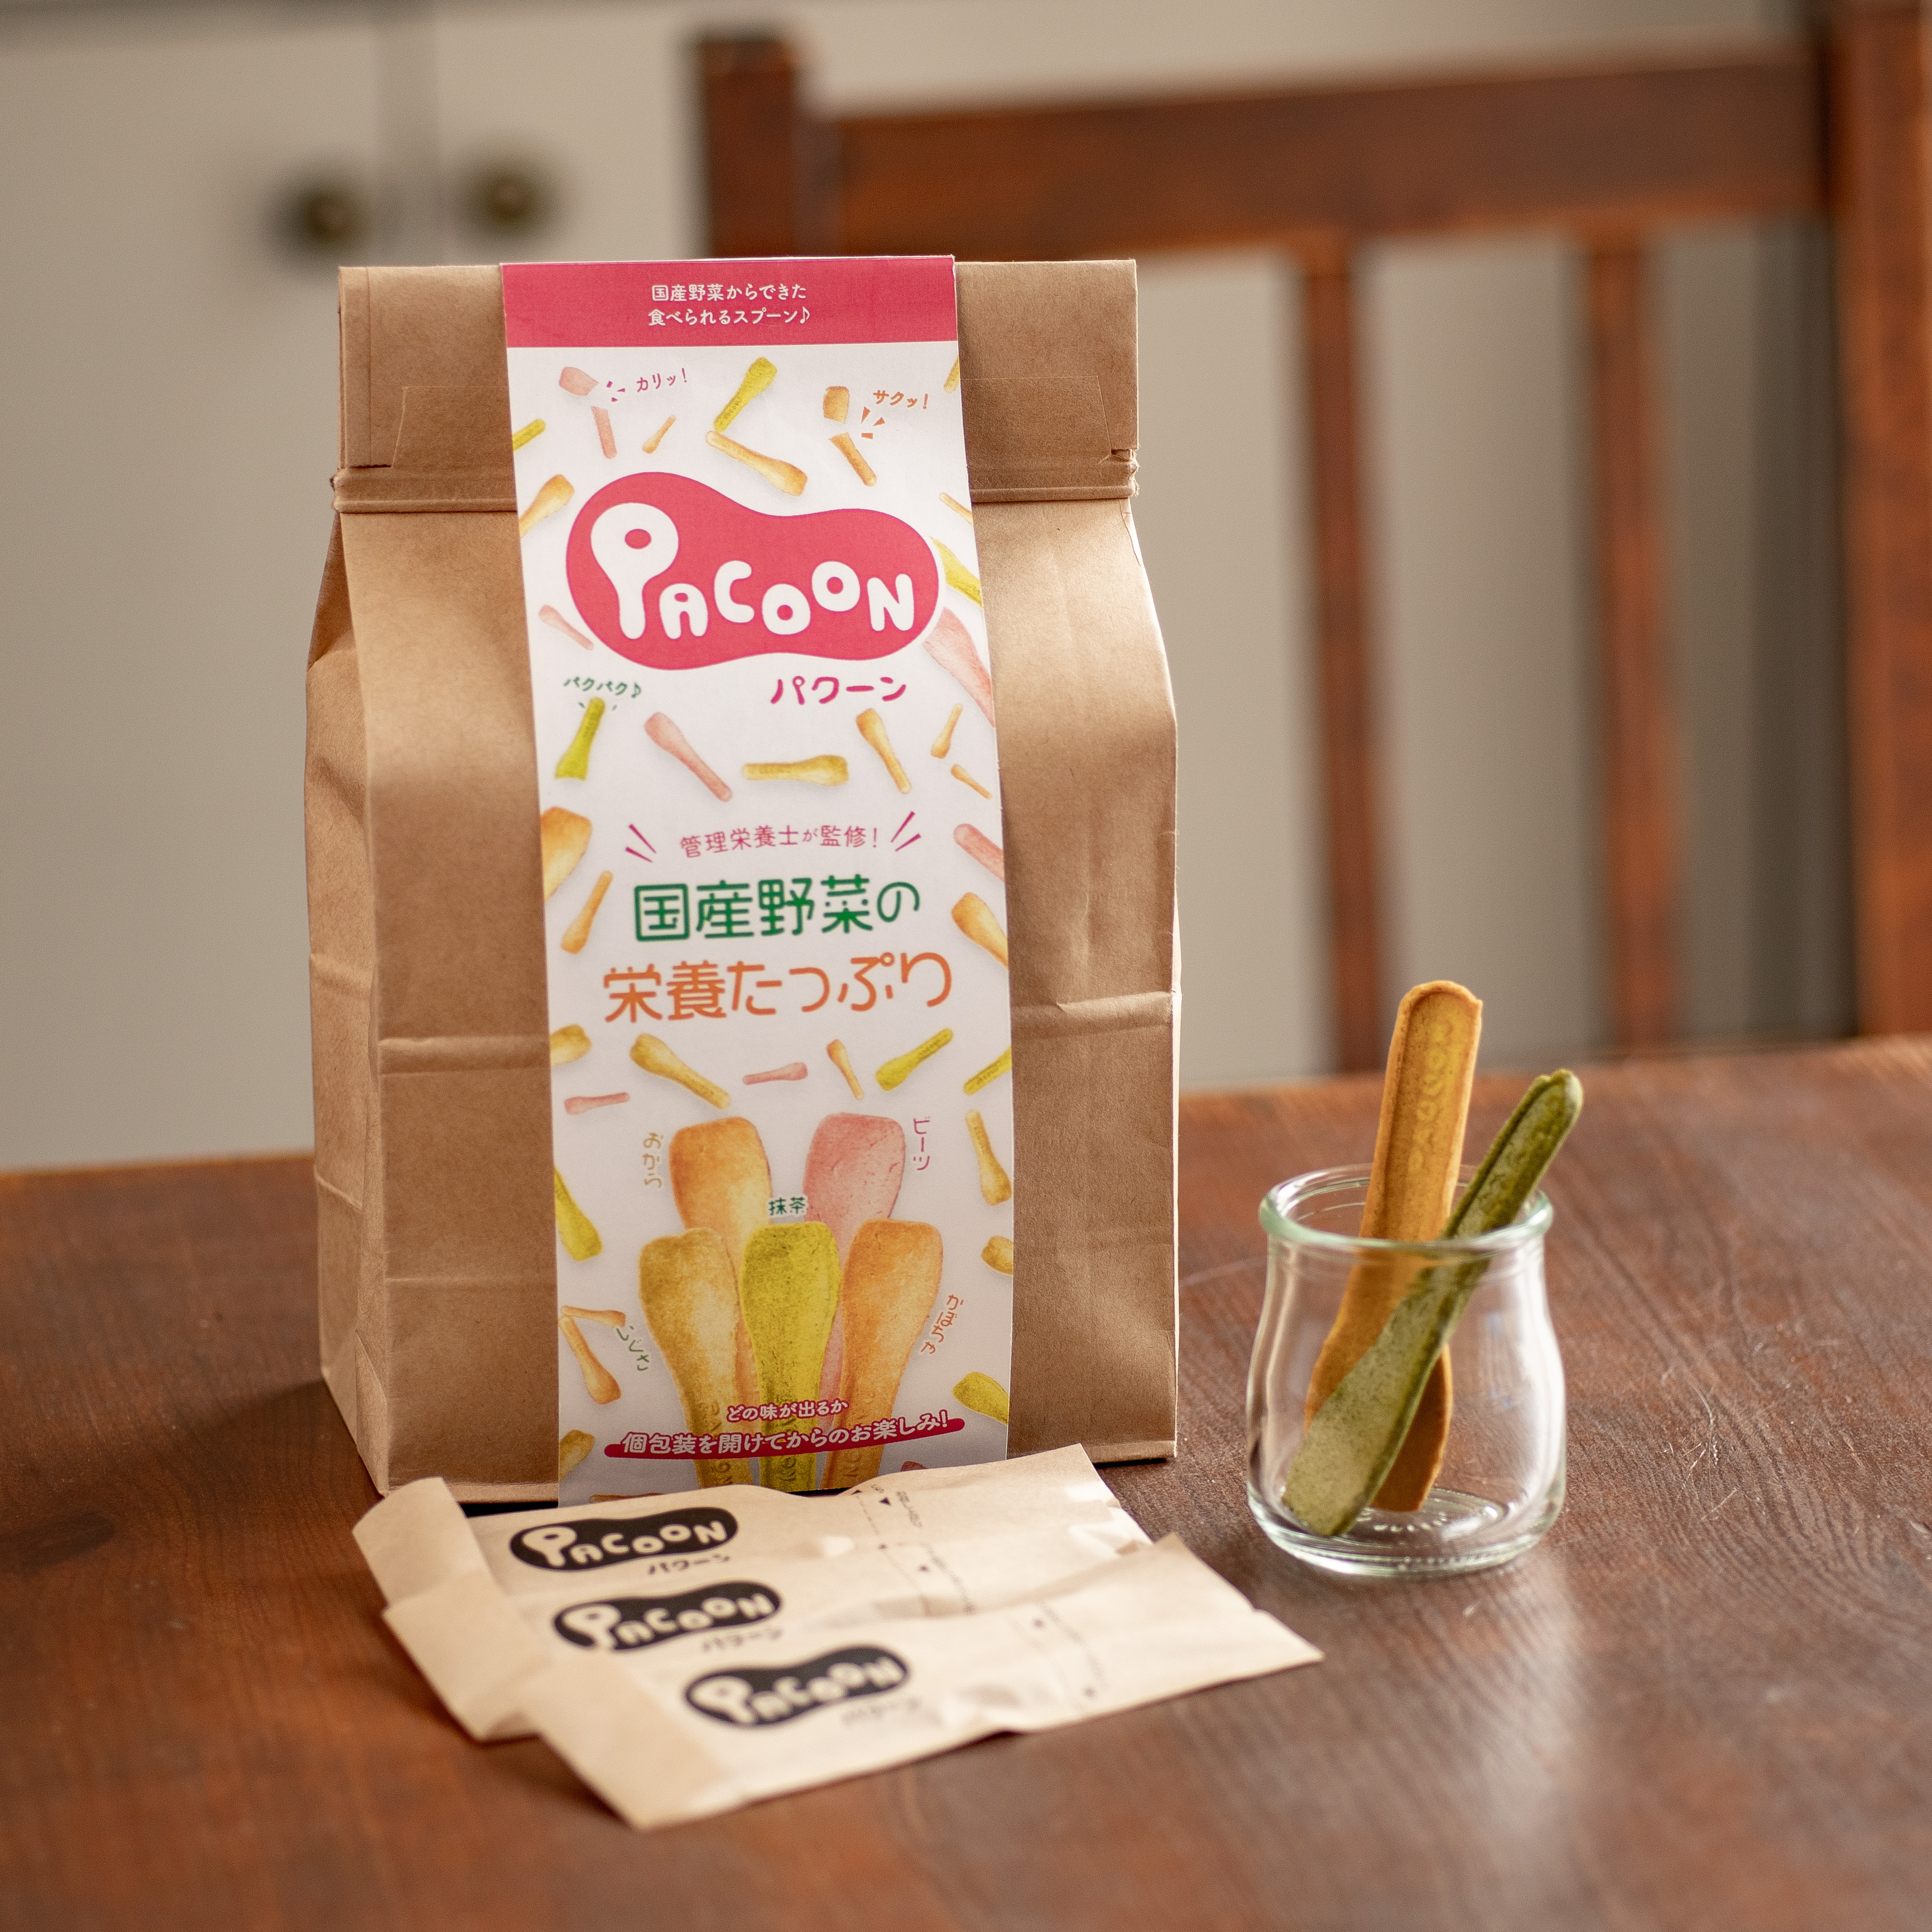 Pacoon 5種ミックス 50本入 発売記念価格 Pacoon パクーン 国産野菜でできた食べられるスプーン